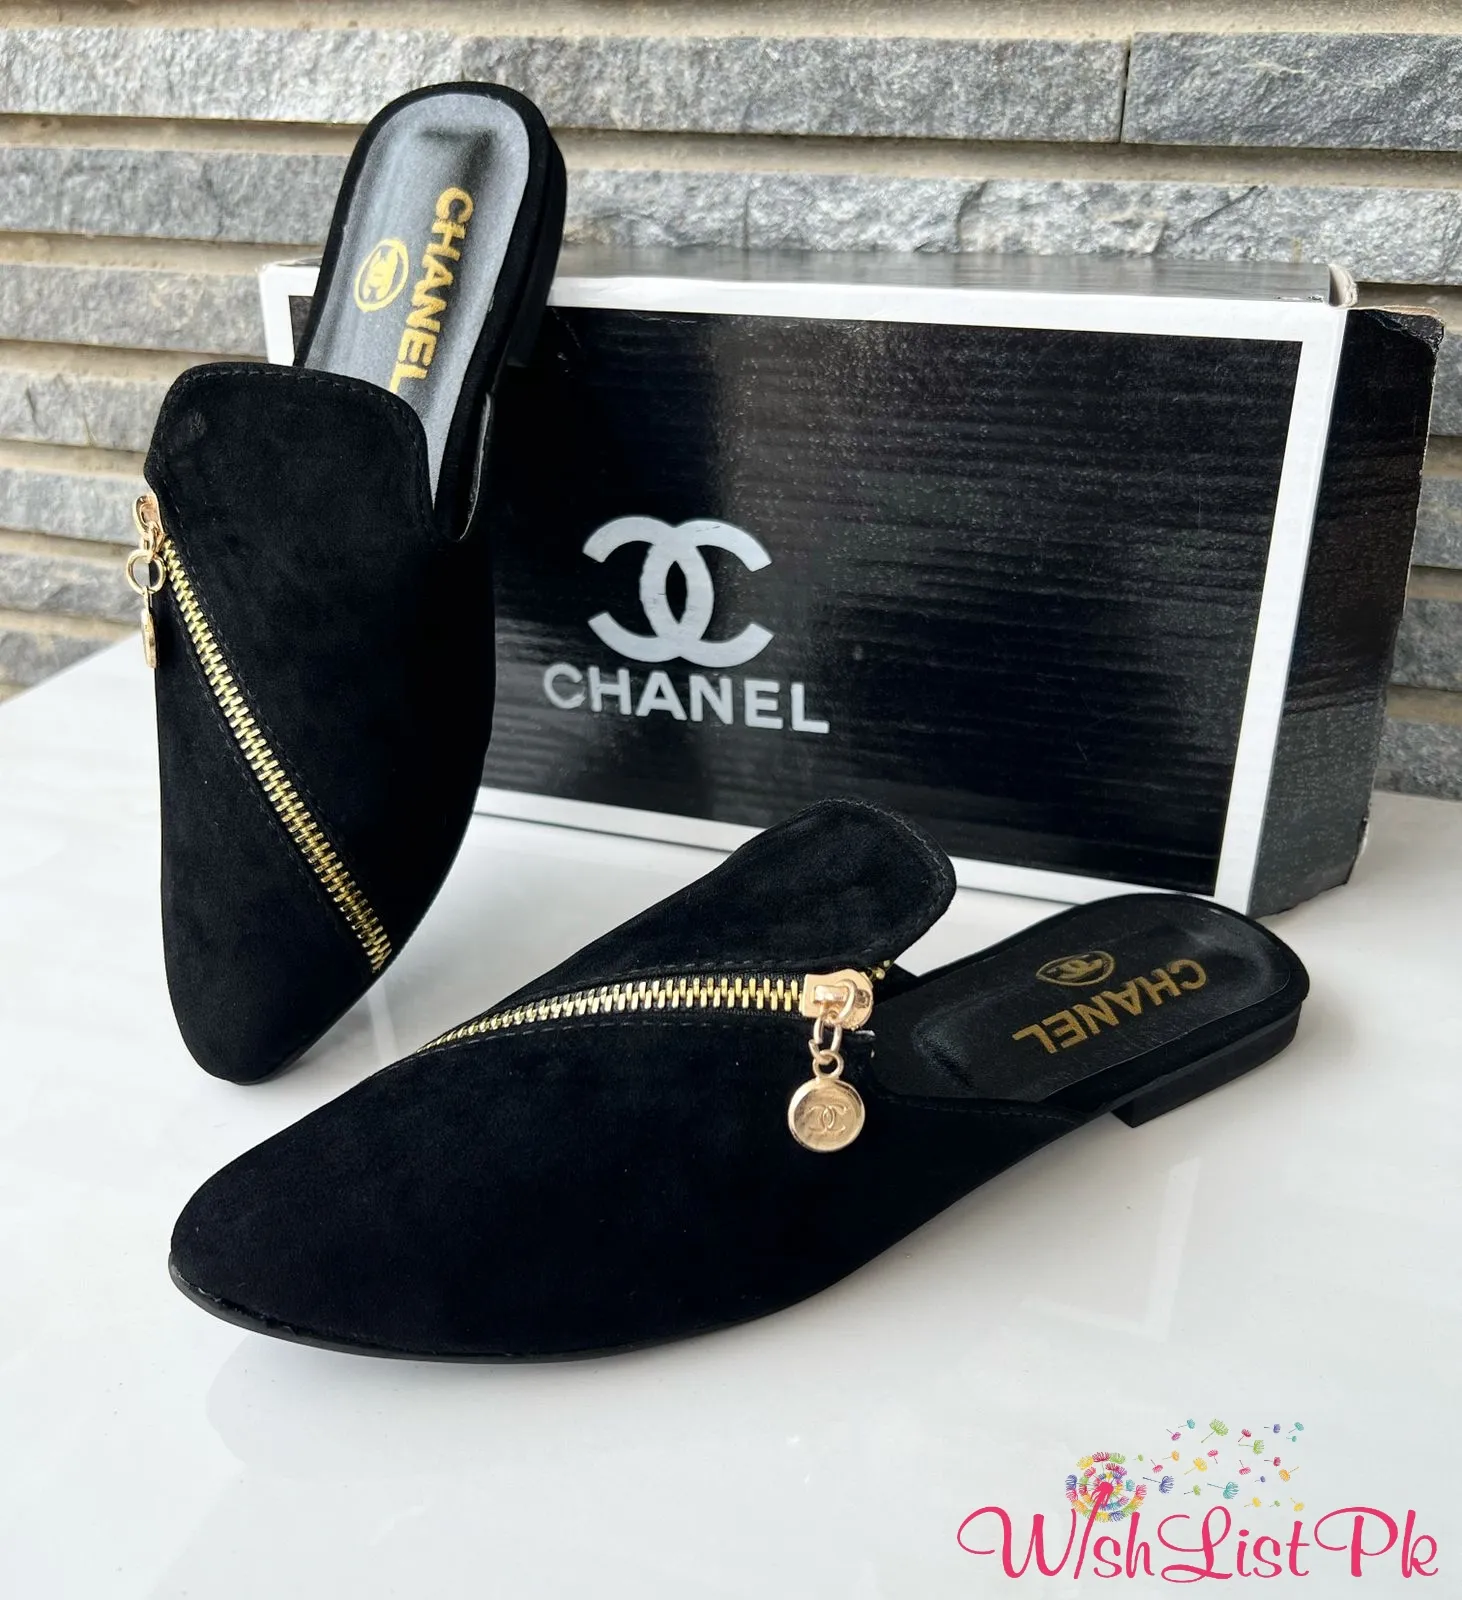 Chanel Zip Pump Shoes